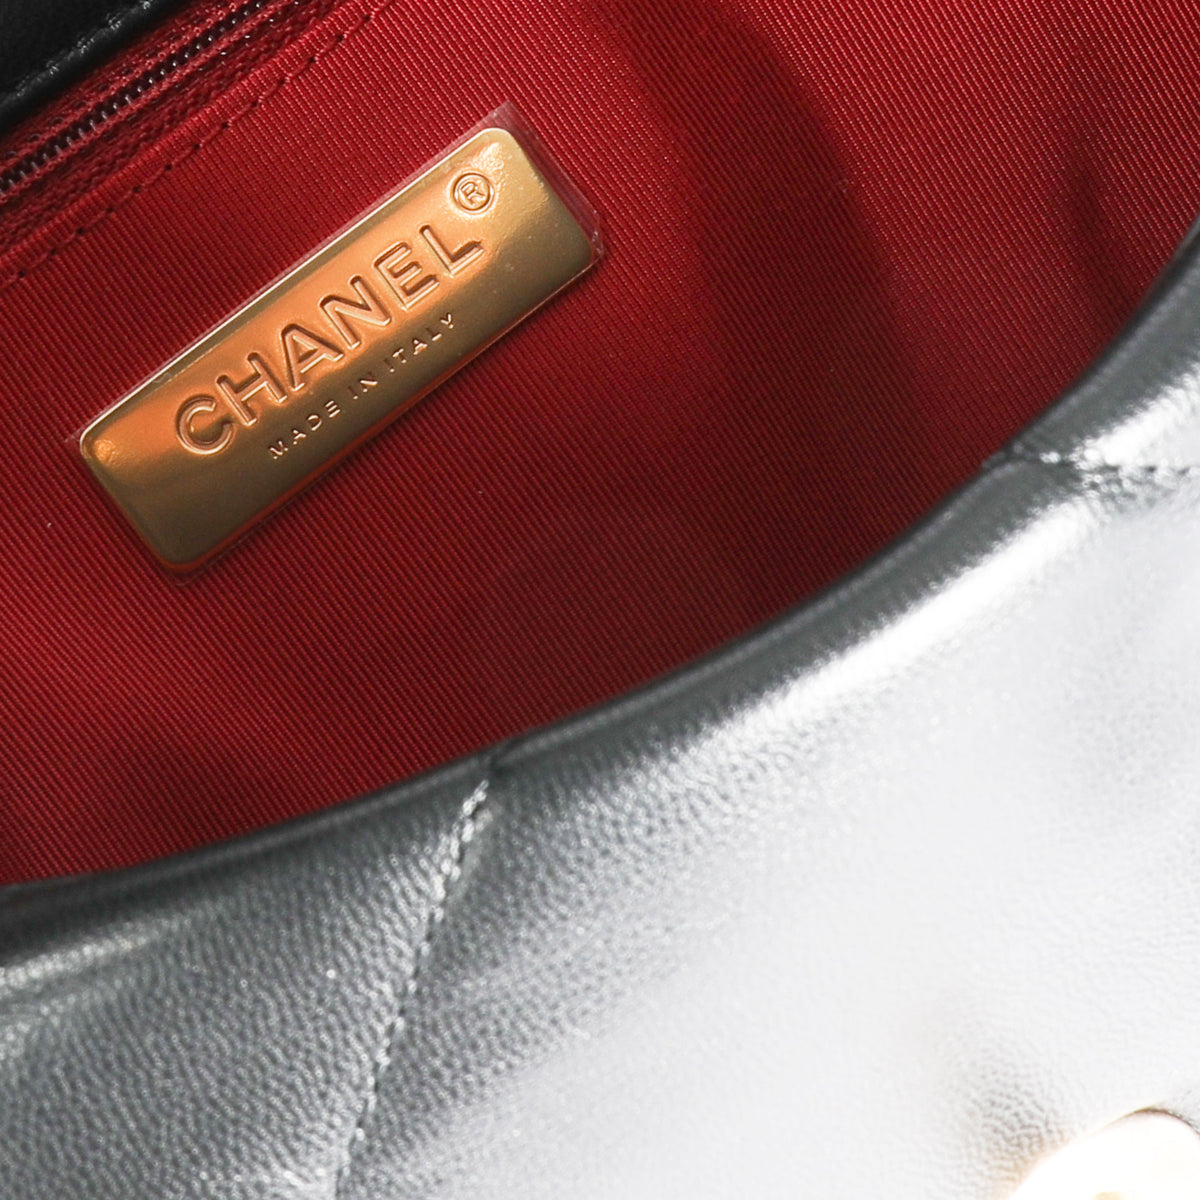 Chanel Black Quilted Lambskin Chanel 19 Medium Flap Bag – myGemma